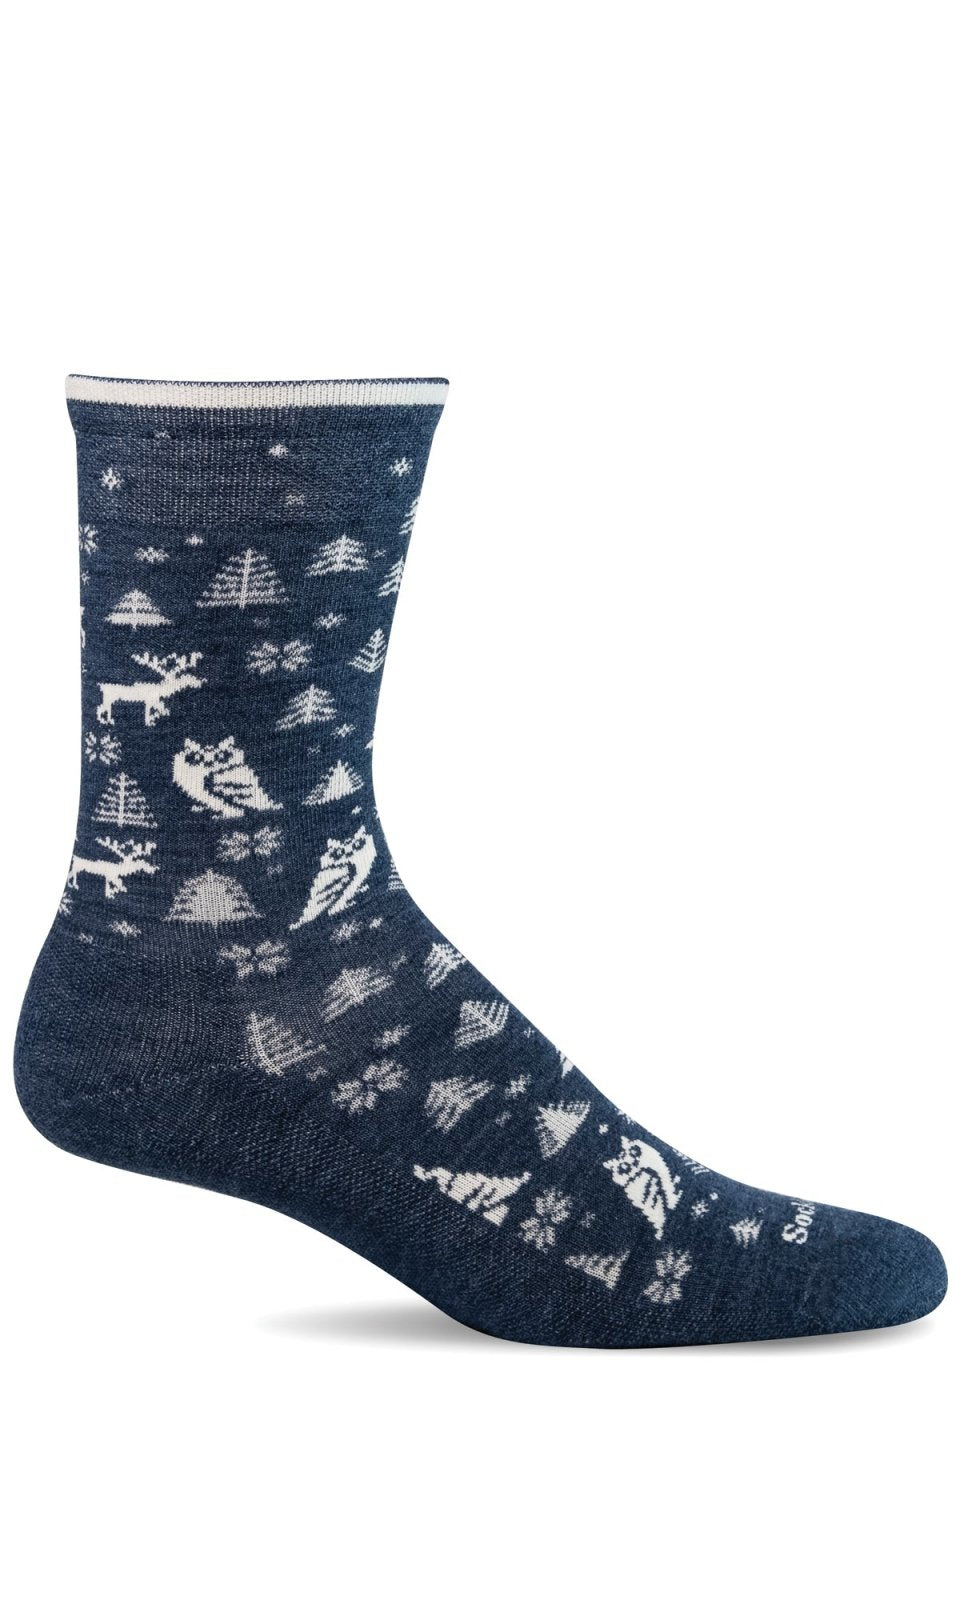 Sockwell Foresty Essential Comfort Socks (Women's)